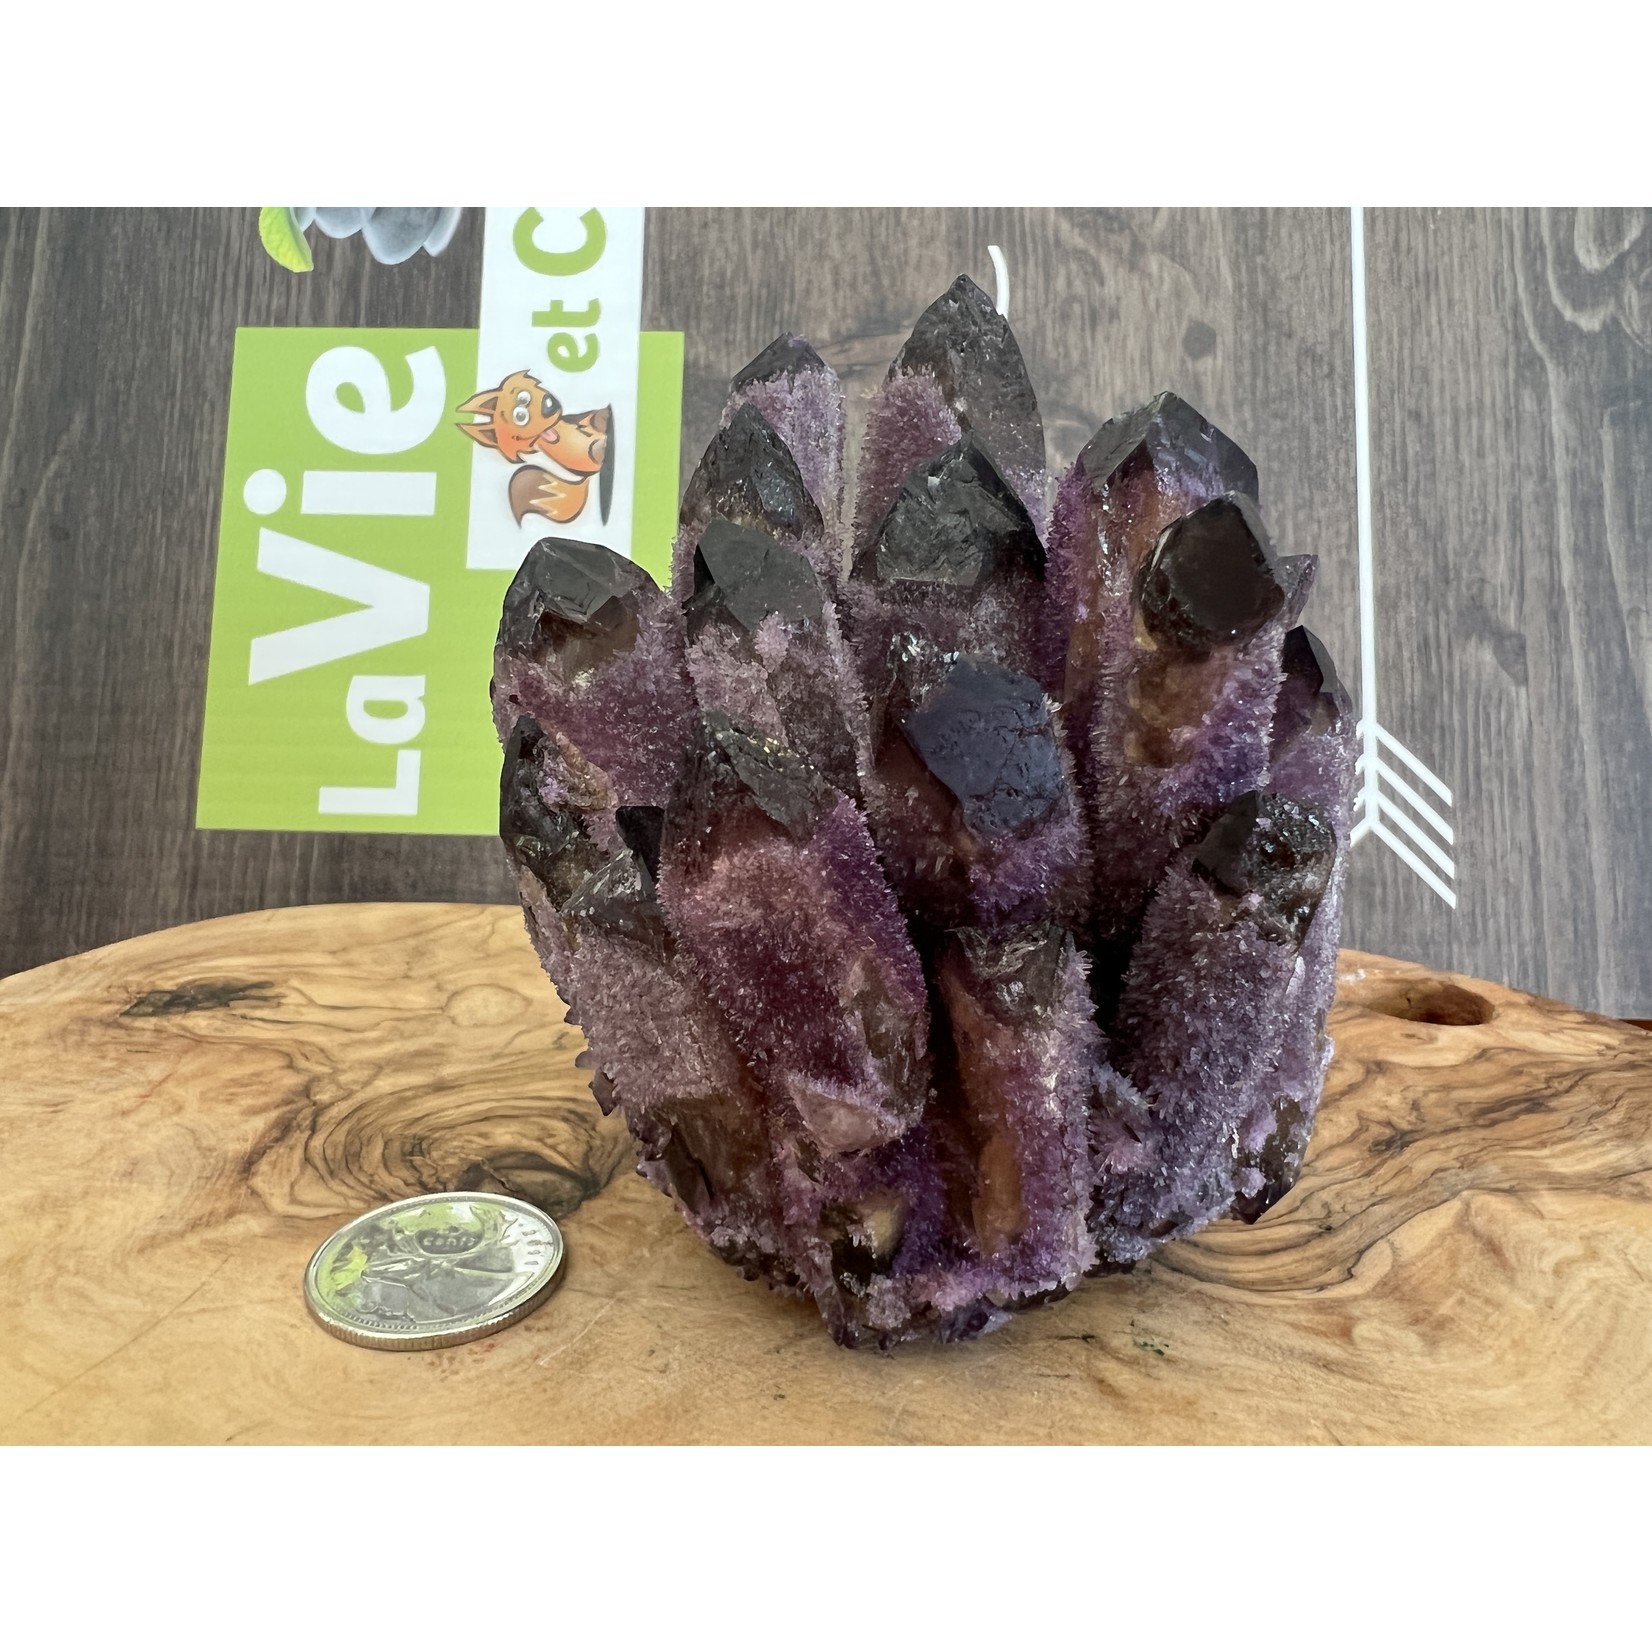 purple phantom quartz cluster, purple quartz, works to cleanse our auric field and environment of negative energies